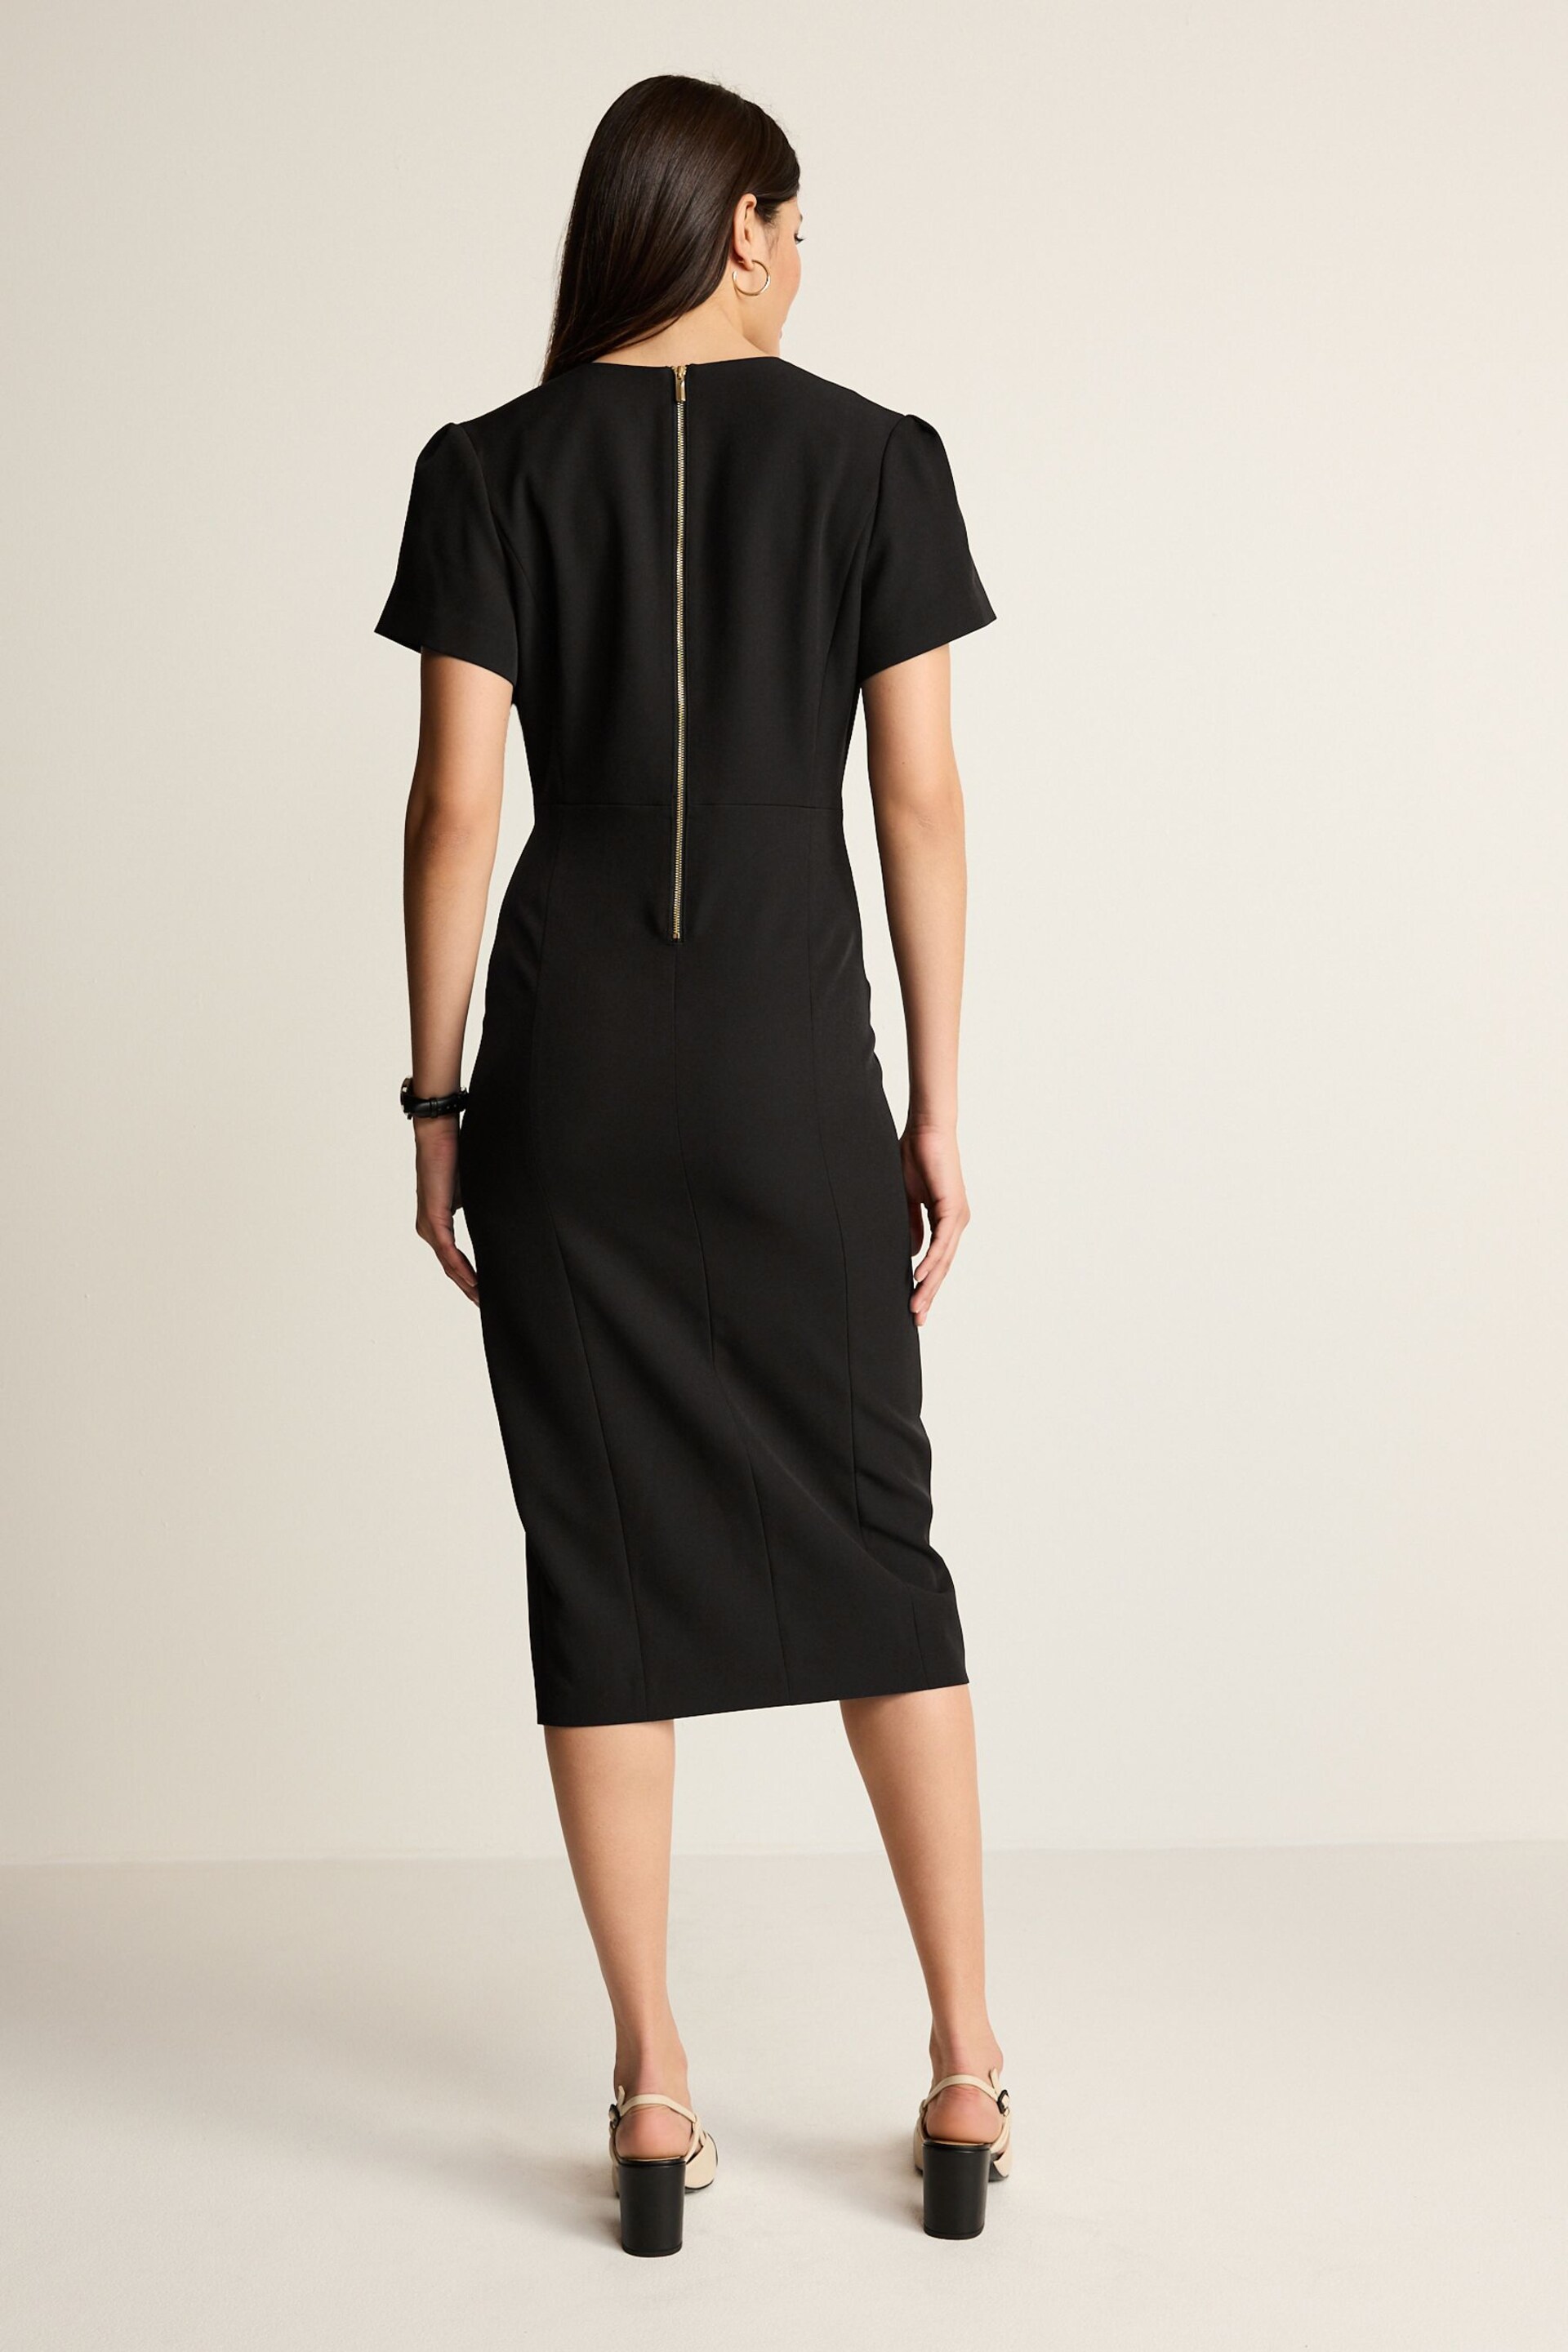 Black Tailored Crepe Midi Dress - Image 3 of 5